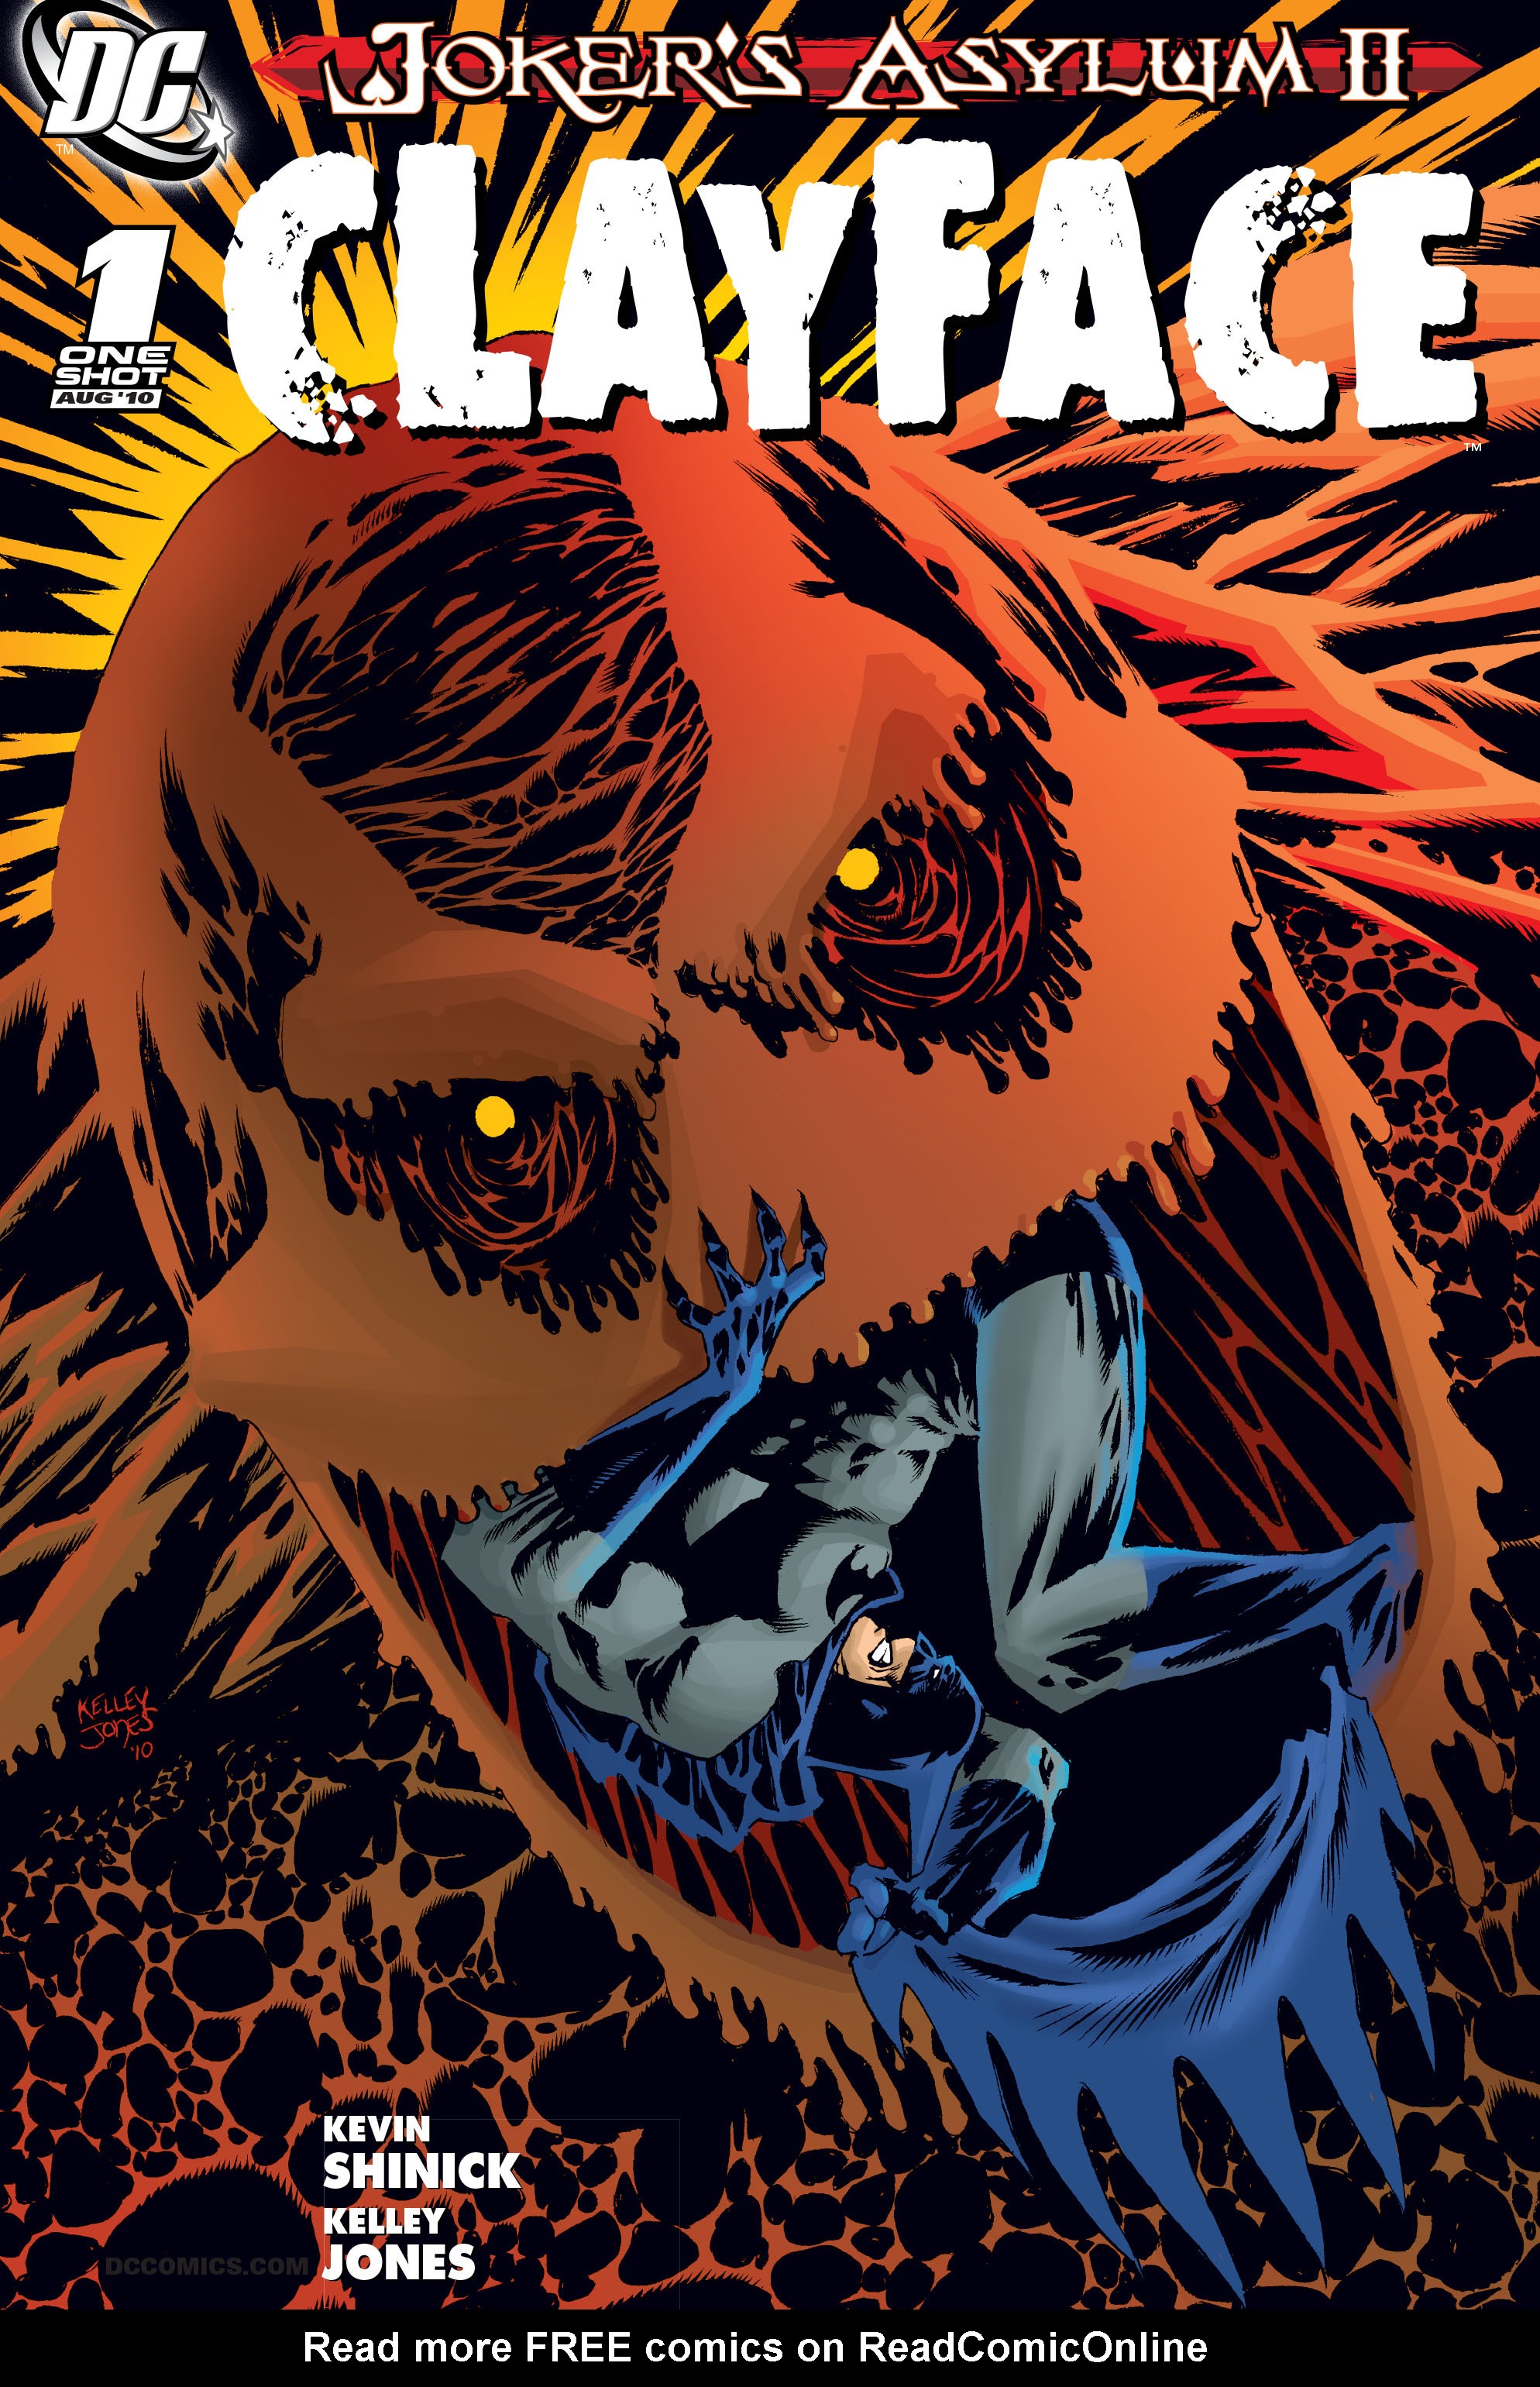 Read online Joker's Asylum II: Clayface comic -  Issue # Full - 1